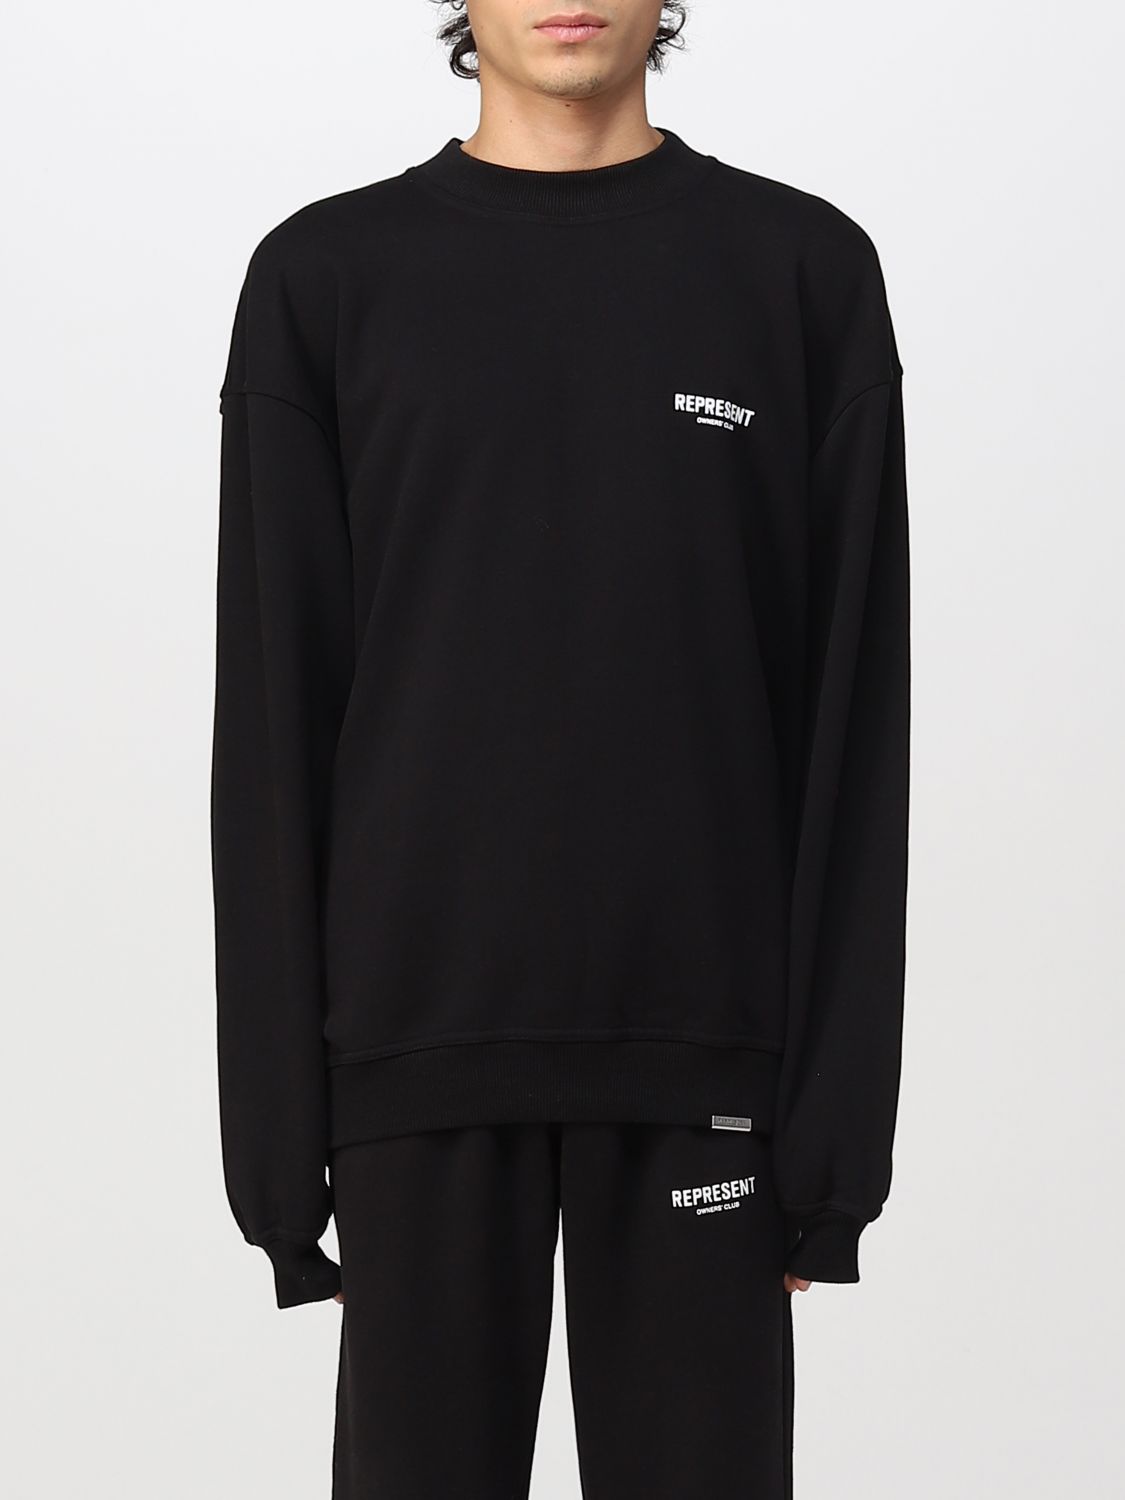 REPRESENT: sweatshirt for man - Black | Represent sweatshirt M04159 ...